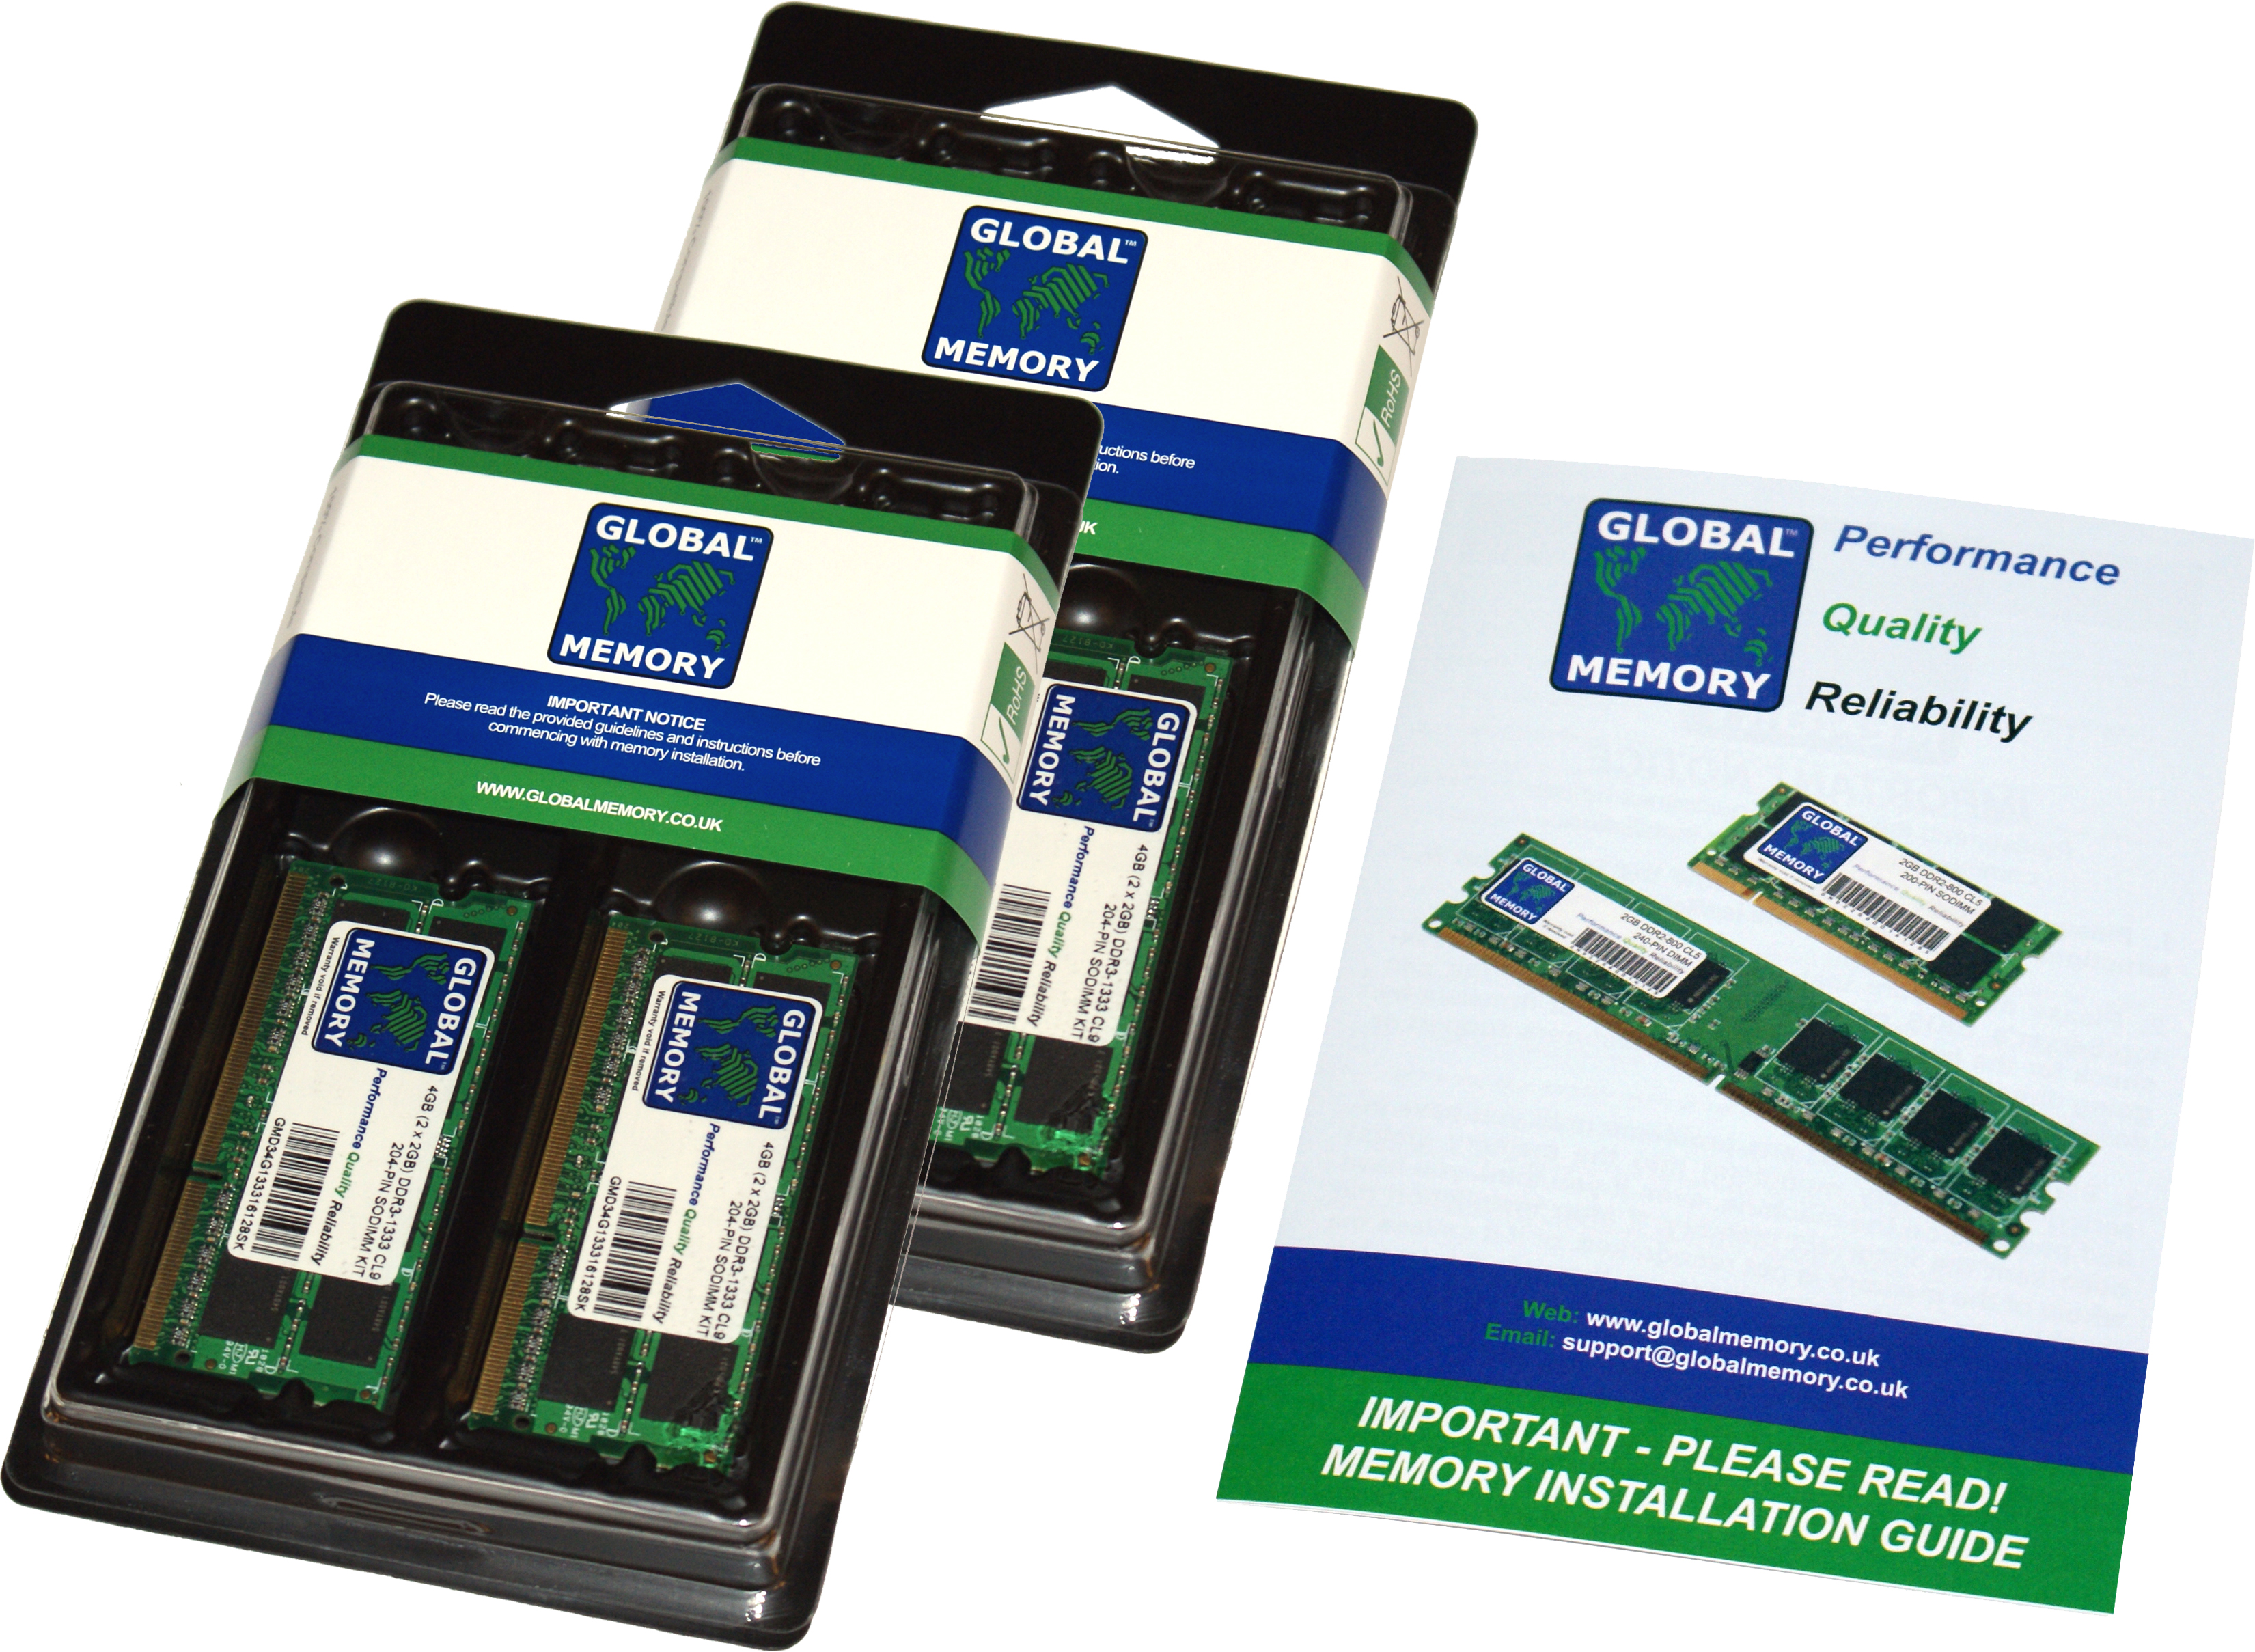 64GB (4 x 16GB) DDR4 2933MHz PC4-23400 260-PIN SODIMM MEMORY RAM KIT FOR ADVENT LAPTOPS/NOTEBOOKS